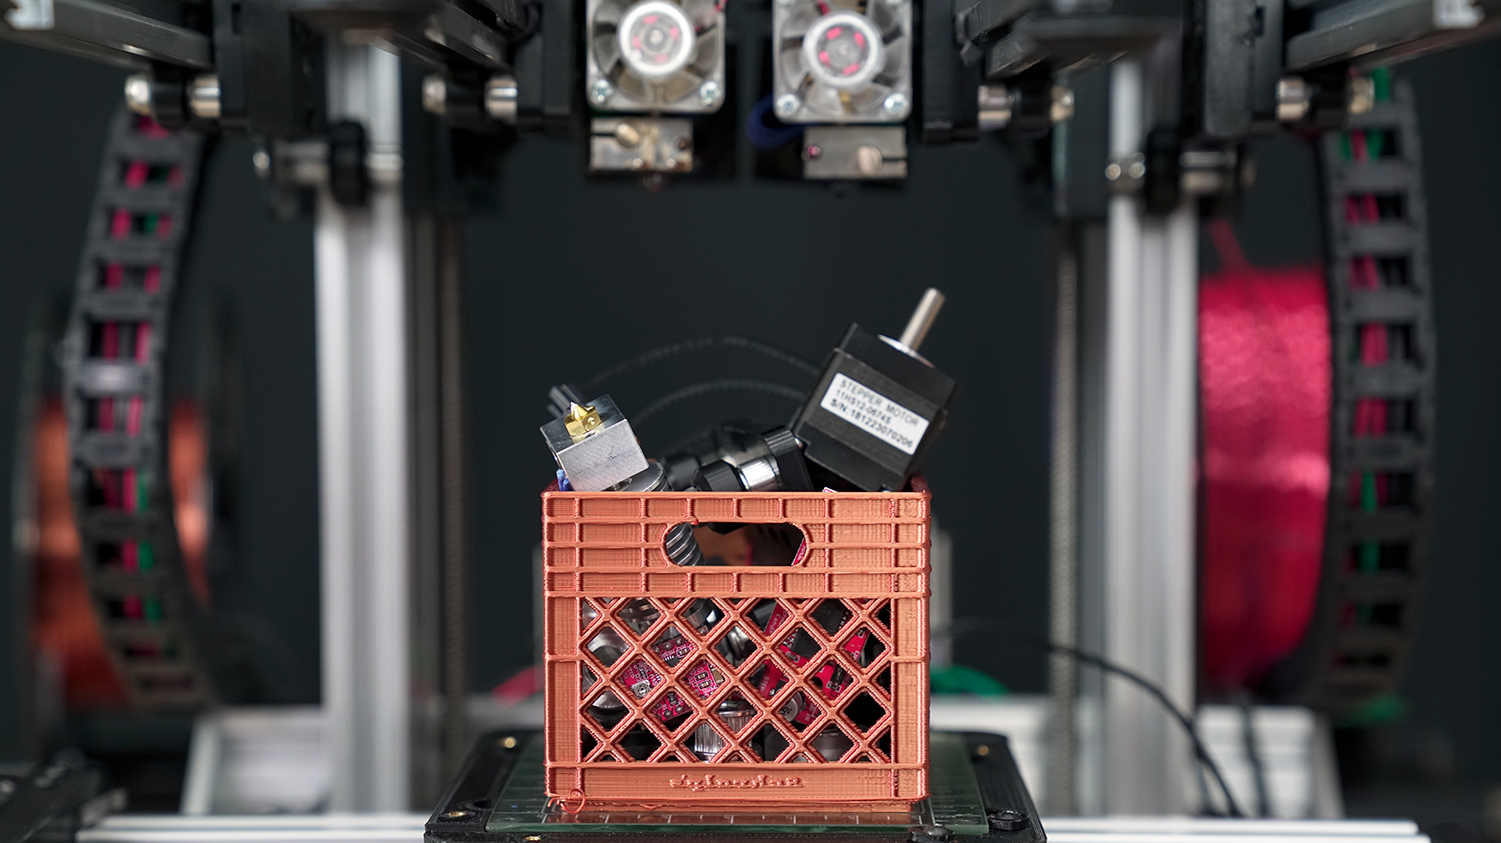 How to Build a 3D Printer